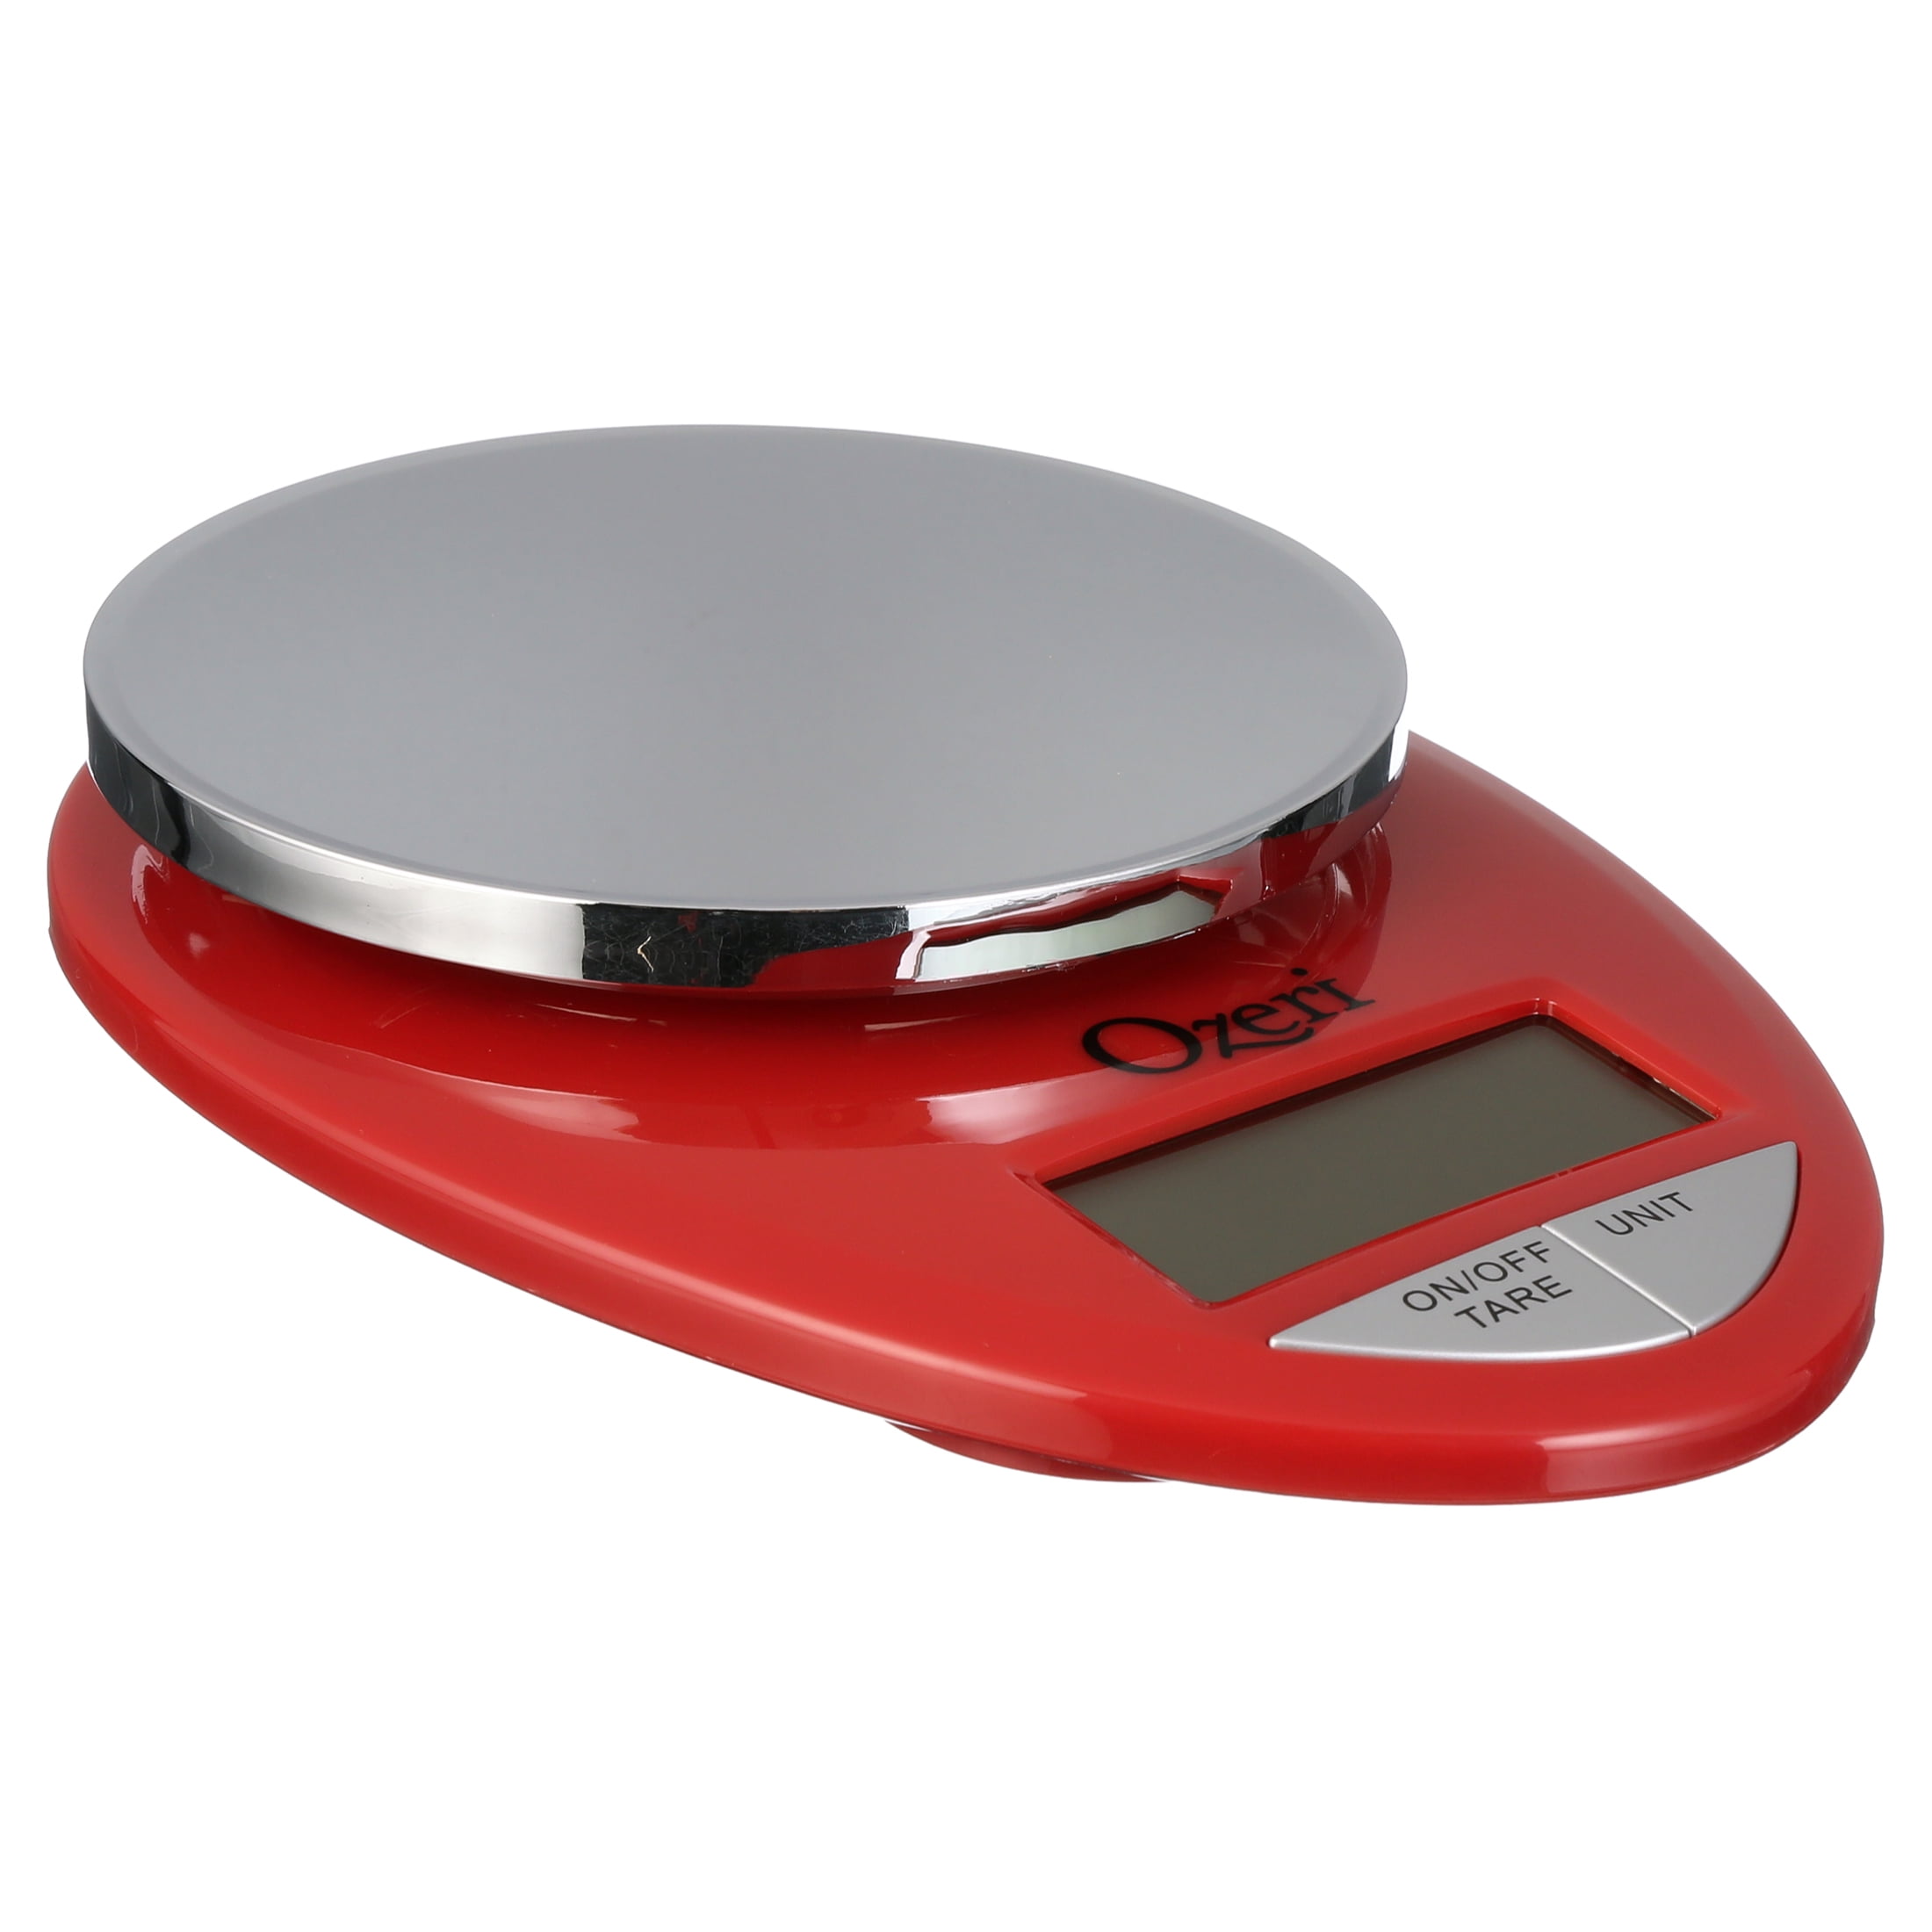 Ozeri Pro Digital Kitchen Food Scale, Teal, 0.05 oz to 12 lbs (1